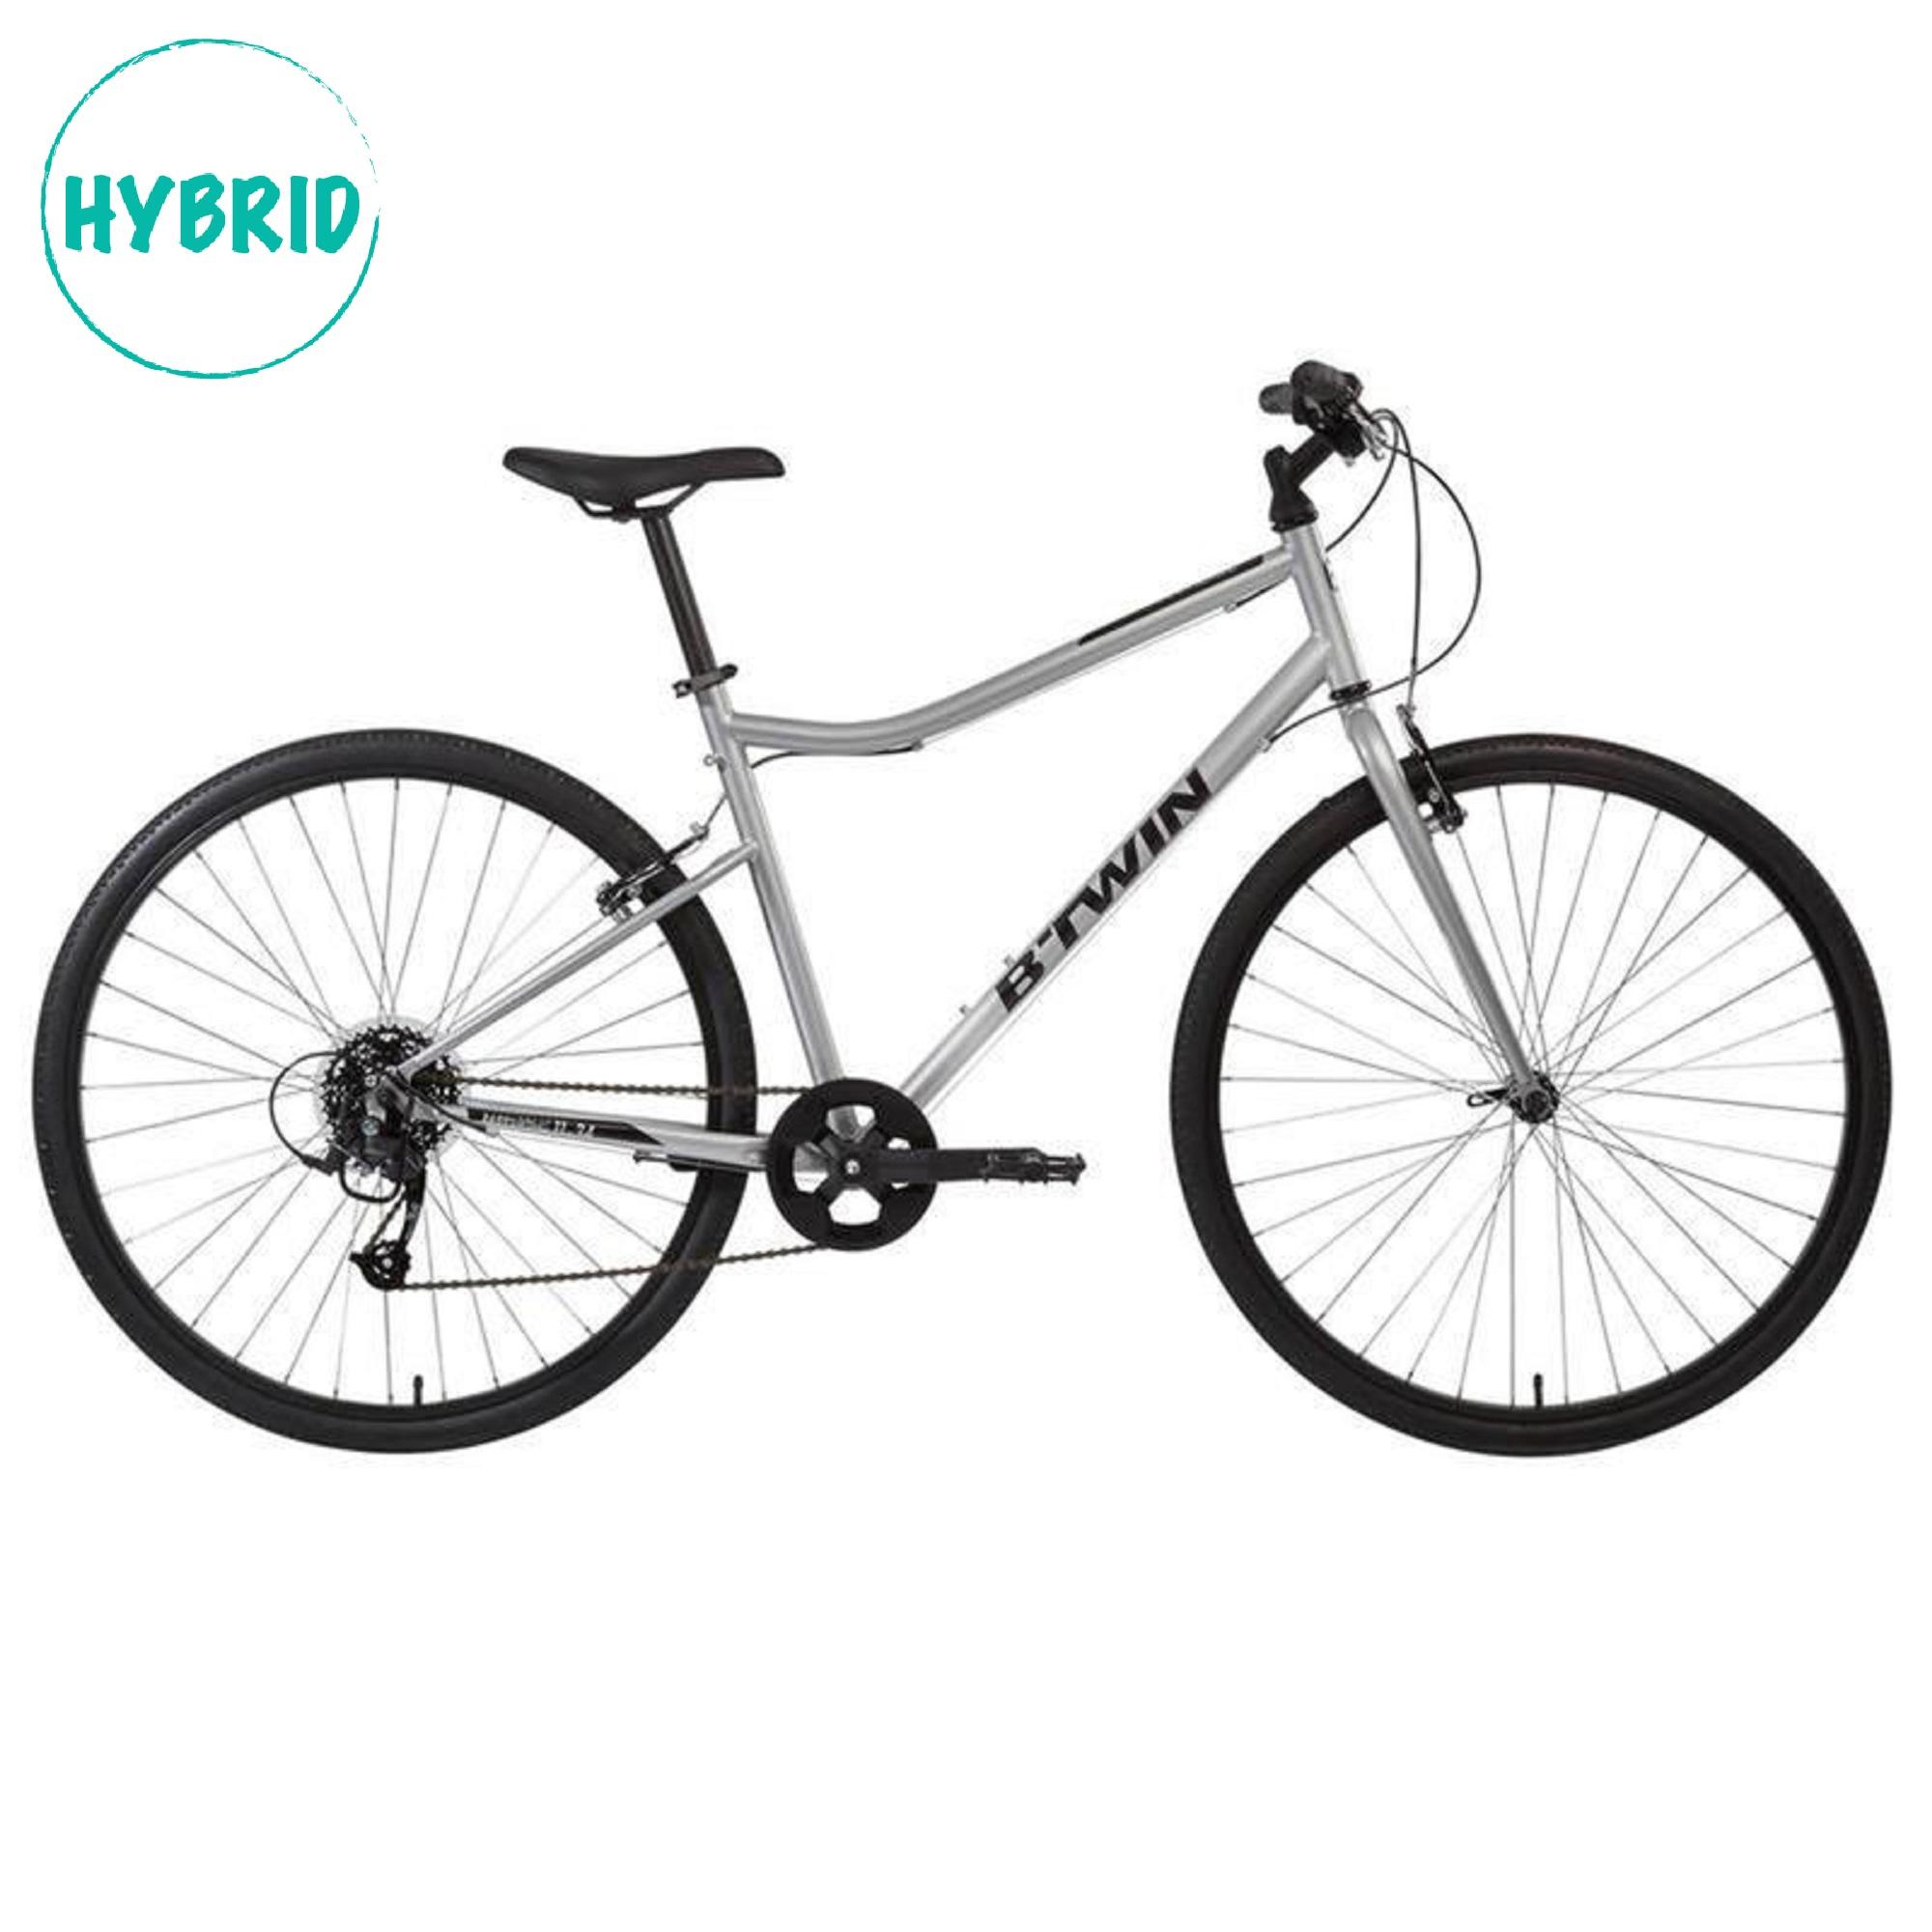 BTWIN RIVERSIDE 120 HYBRID CYCLE 